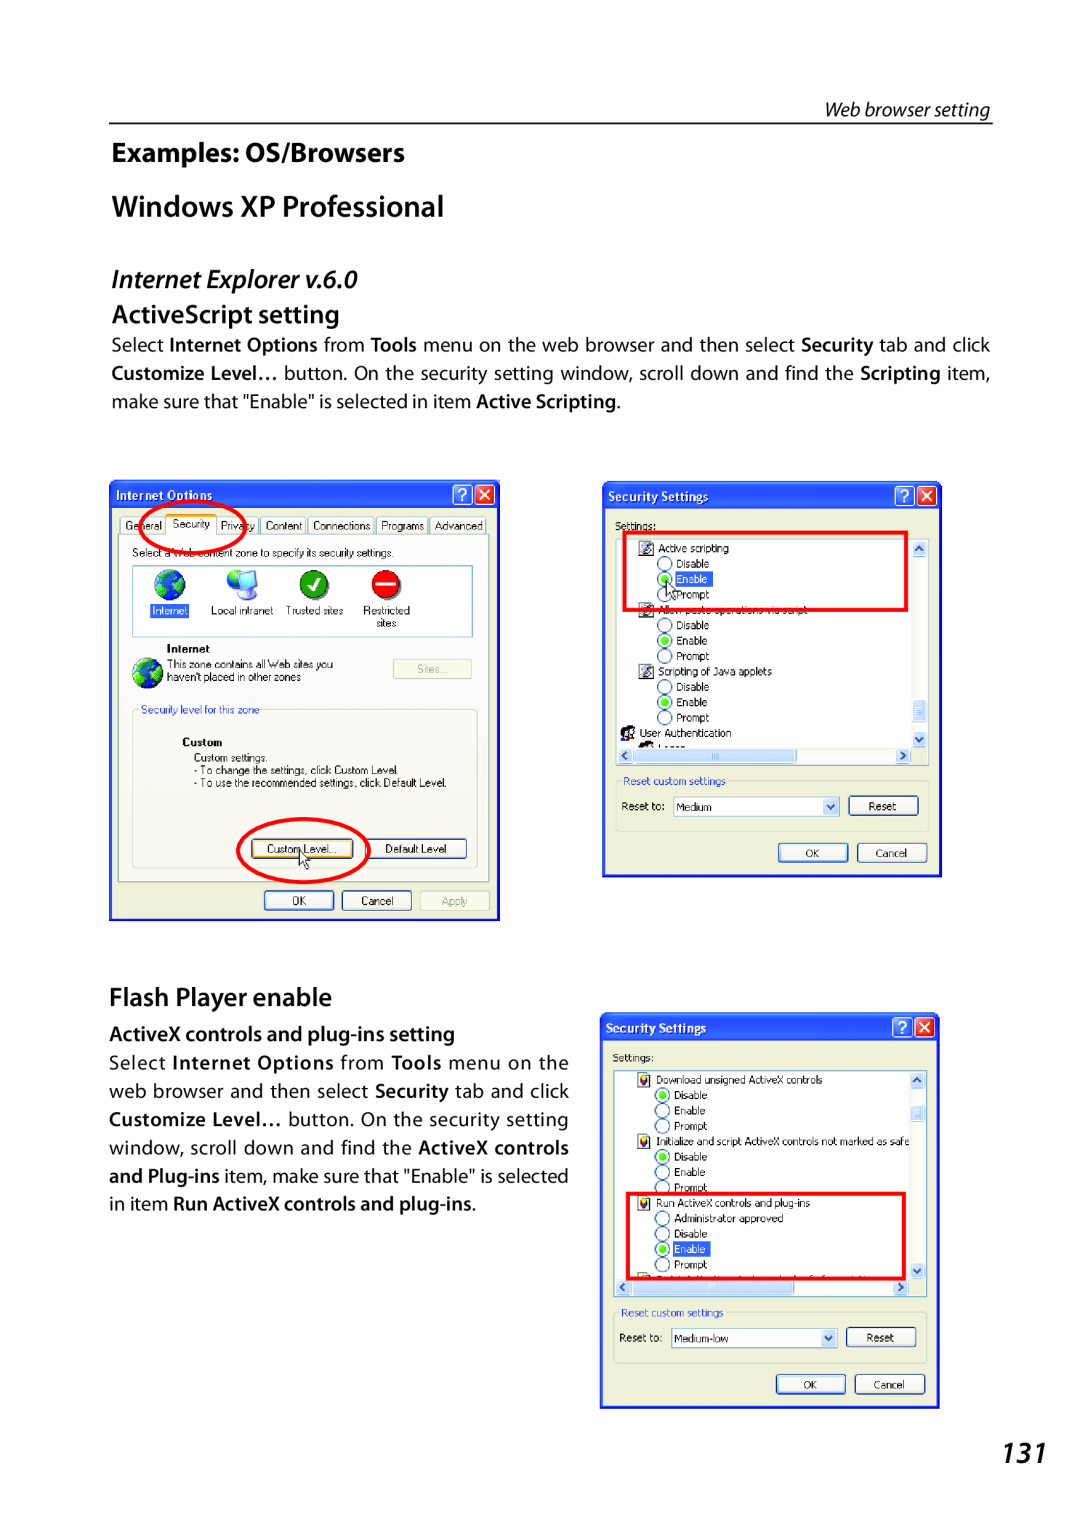 Sanyo PLCXL51 Windows XP Professional, Examples: OS/Browsers, Internet Explorer, ActiveScript setting, Flash Player enable 